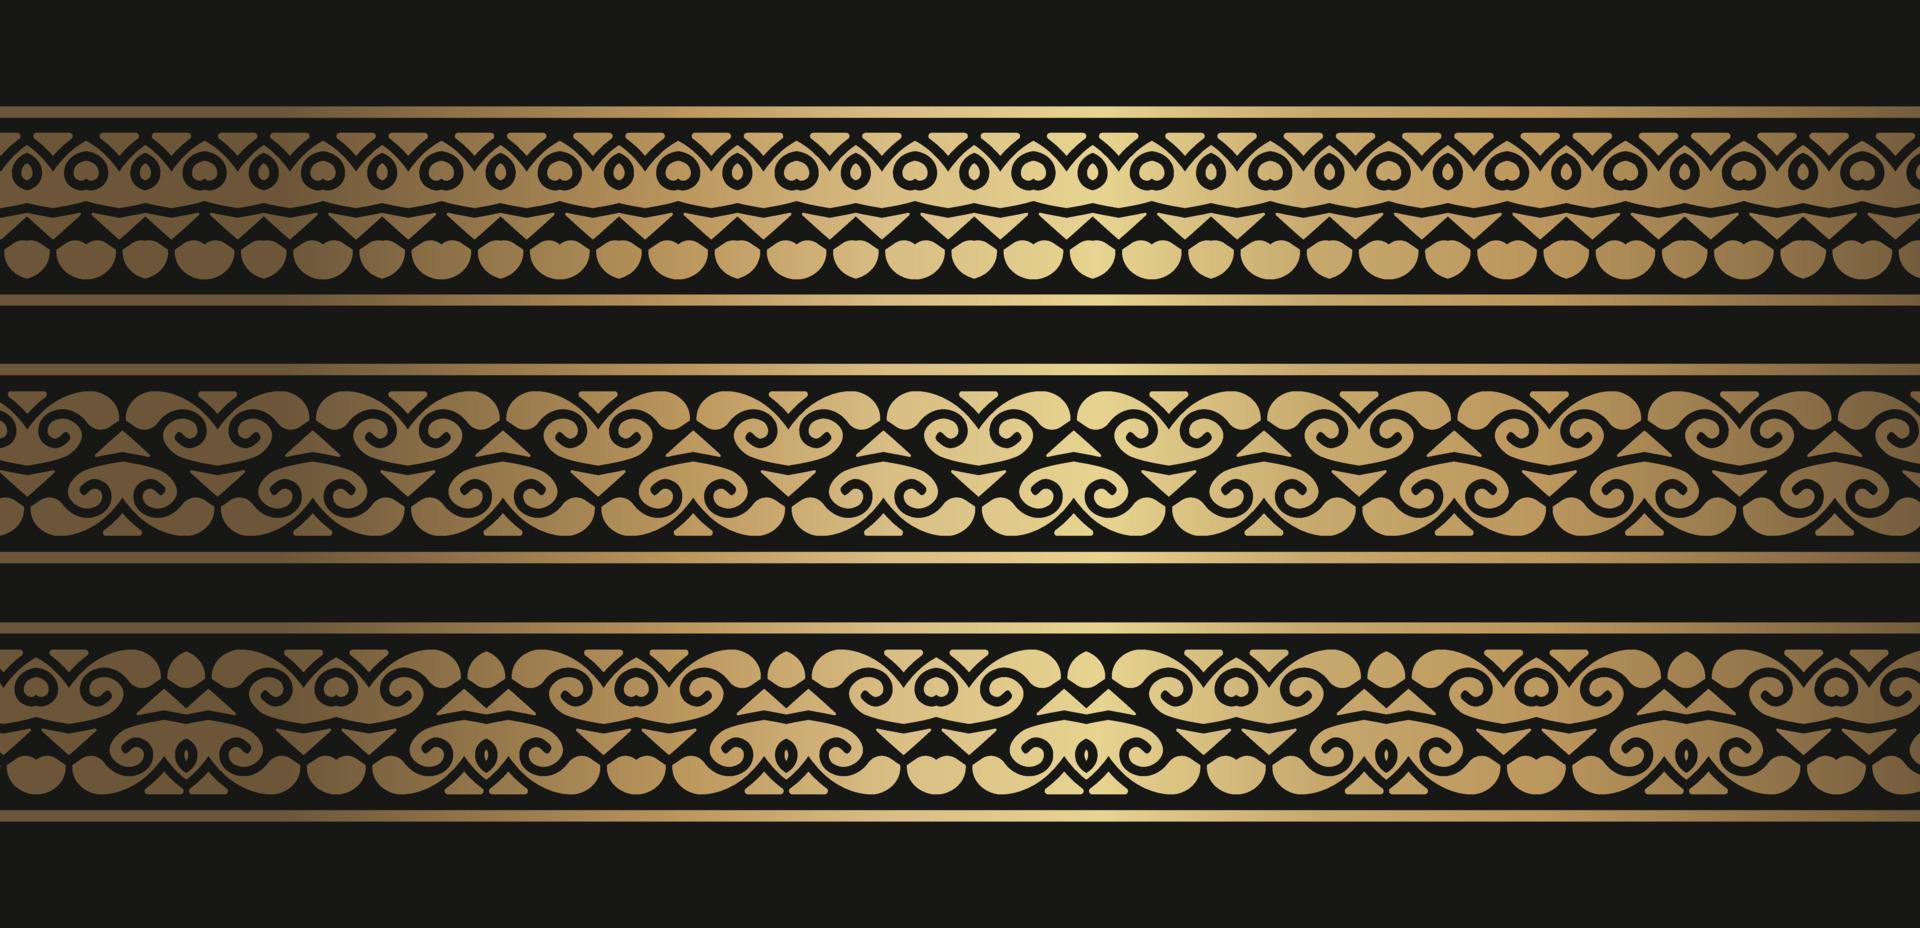 Luxury ornament style ethnic seamless borders set vector